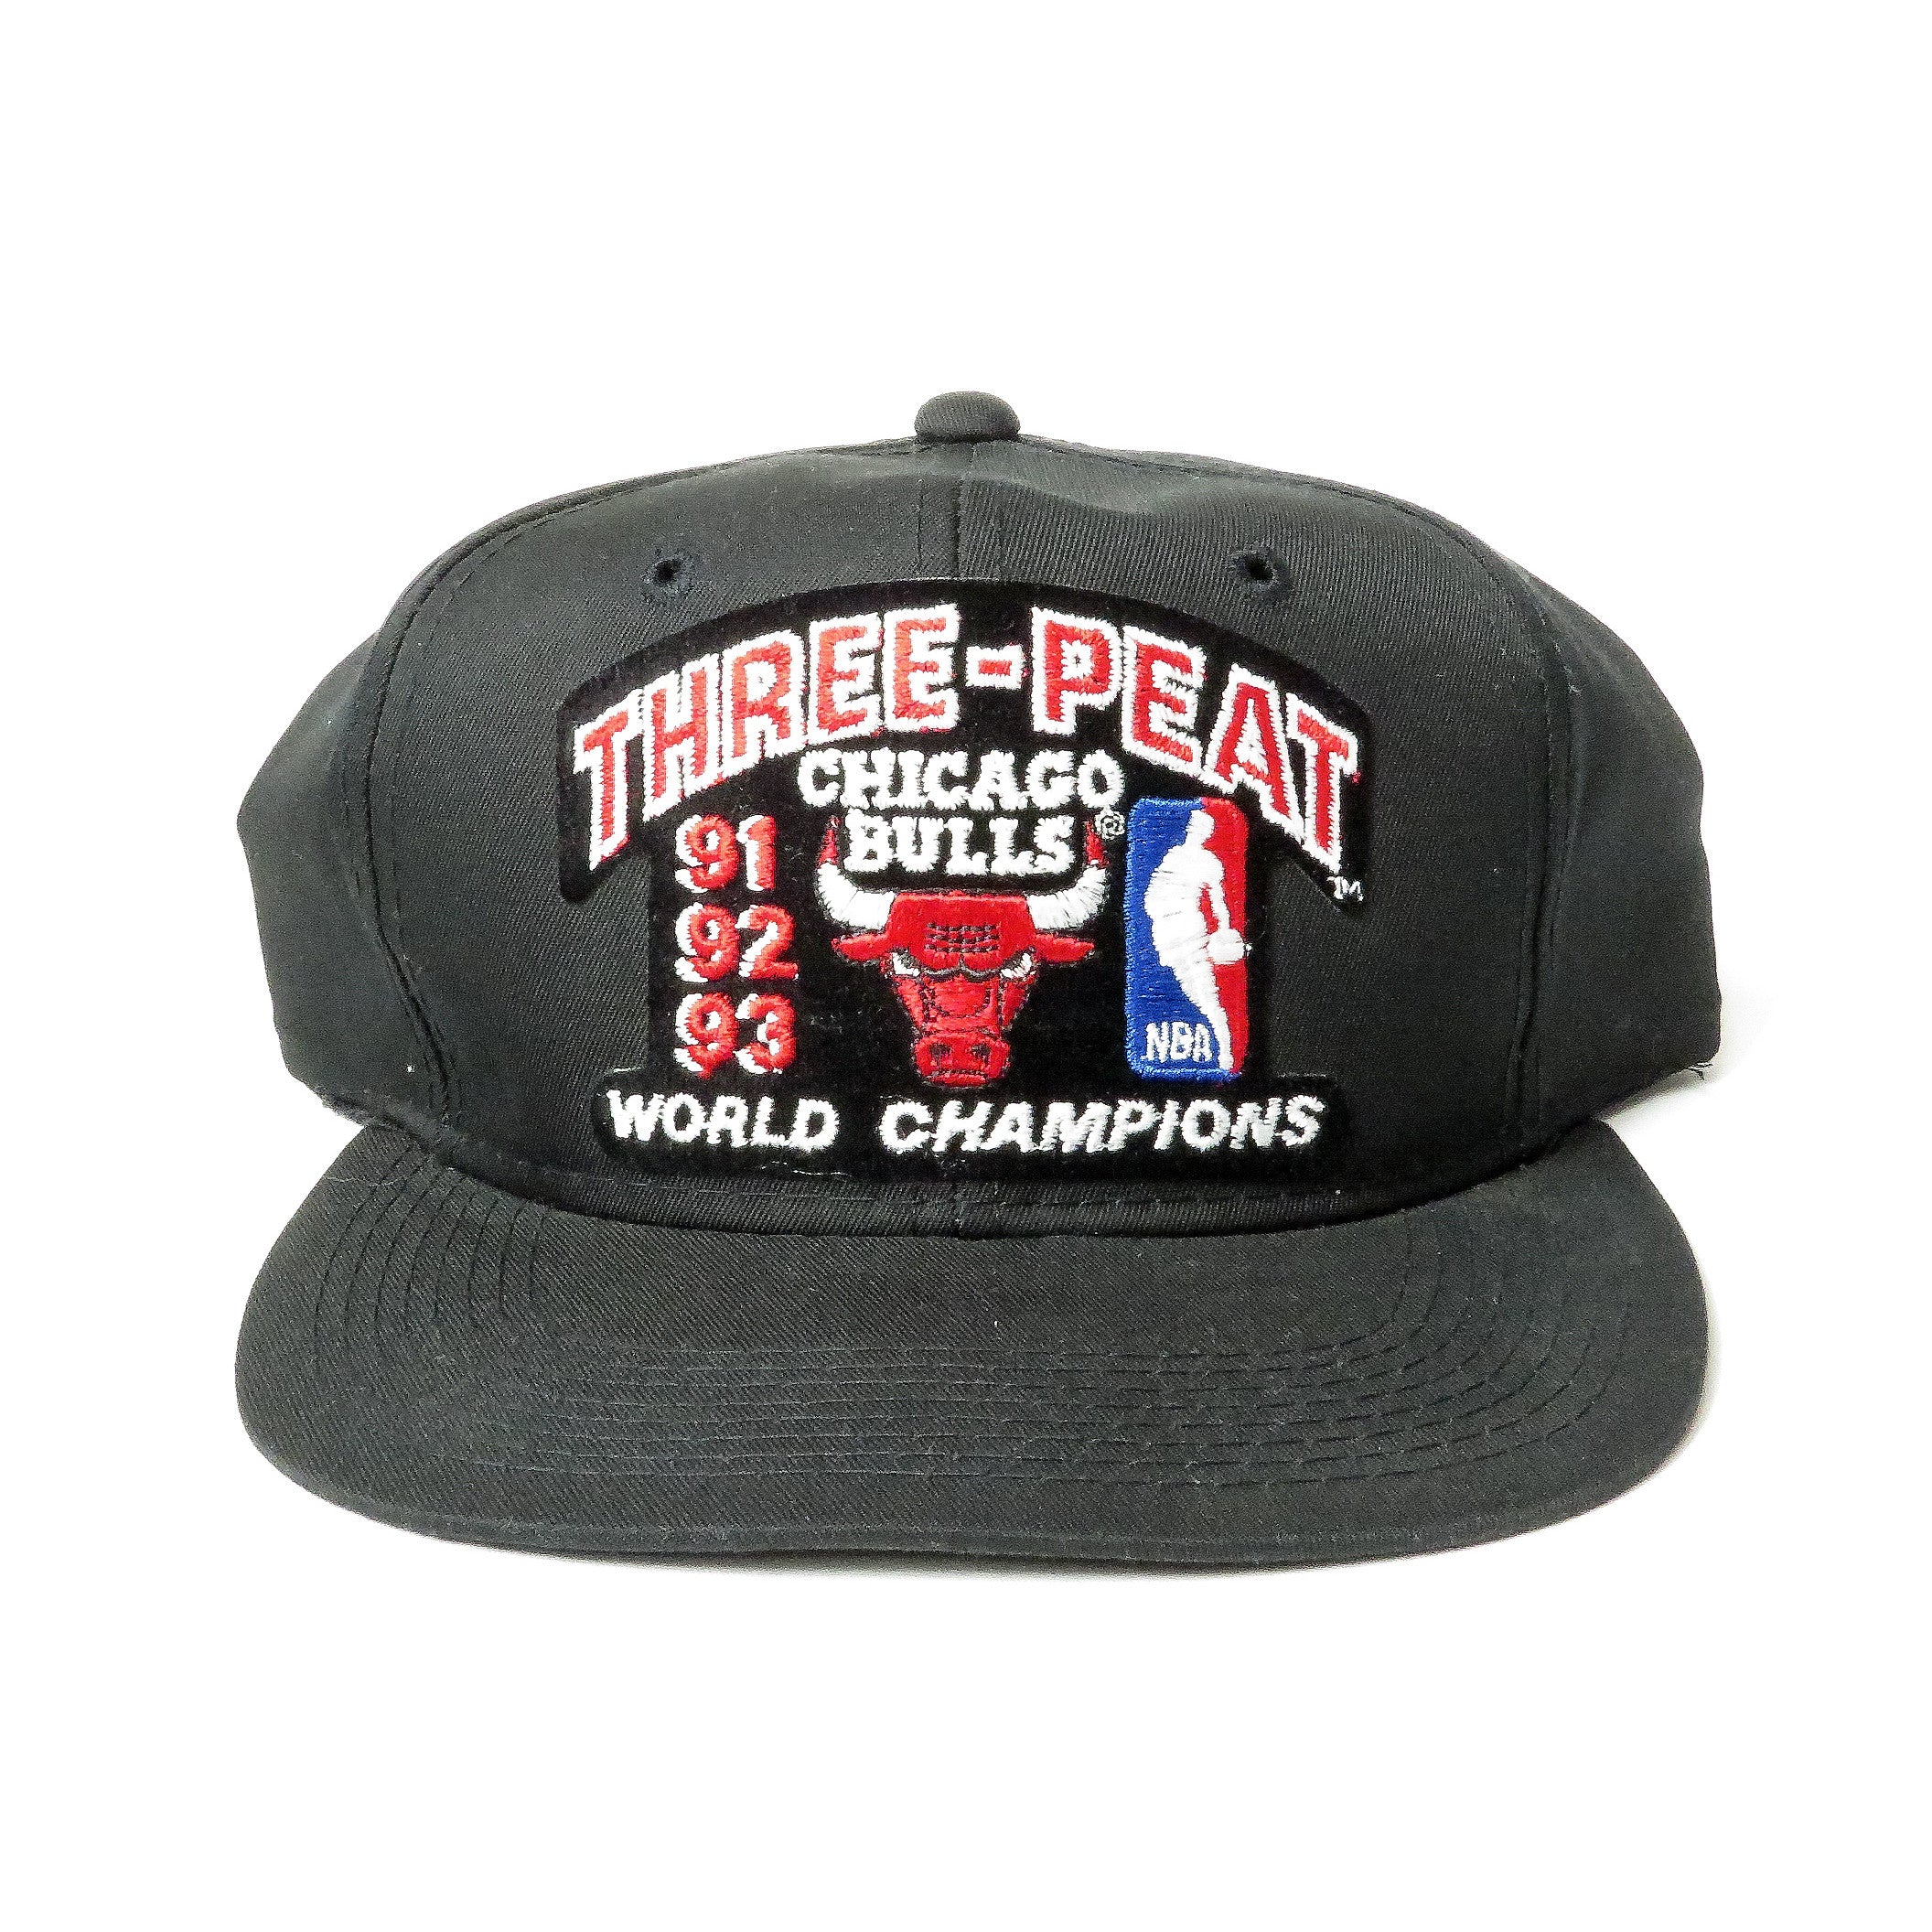 Vintage Chicago Bulls Three Peat World Champions Snapback Hat